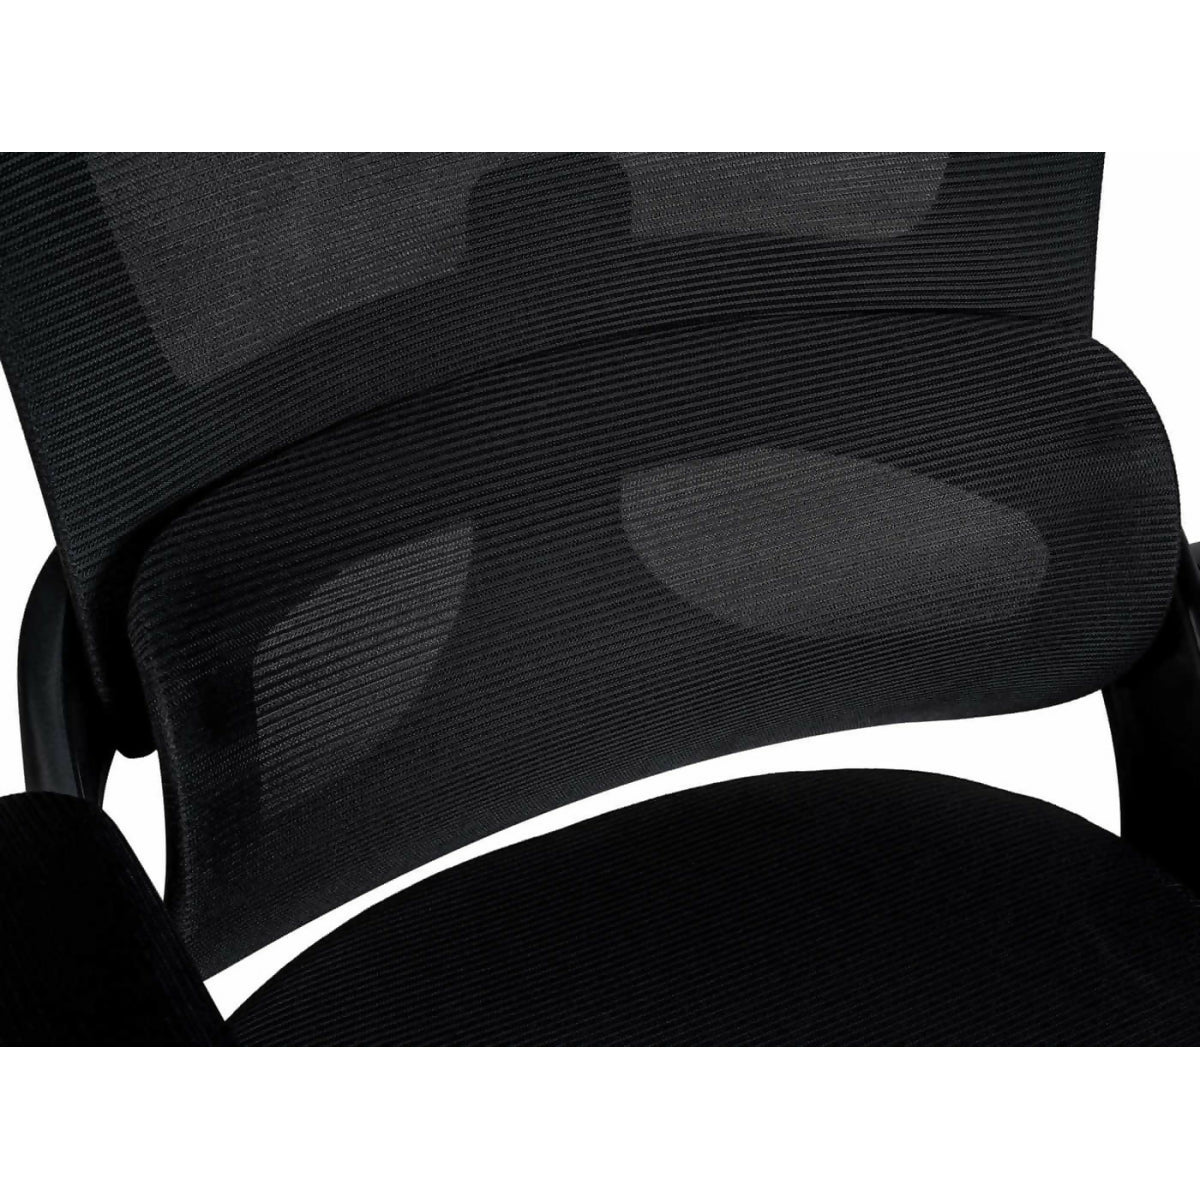 Garston office chair - Black fabric